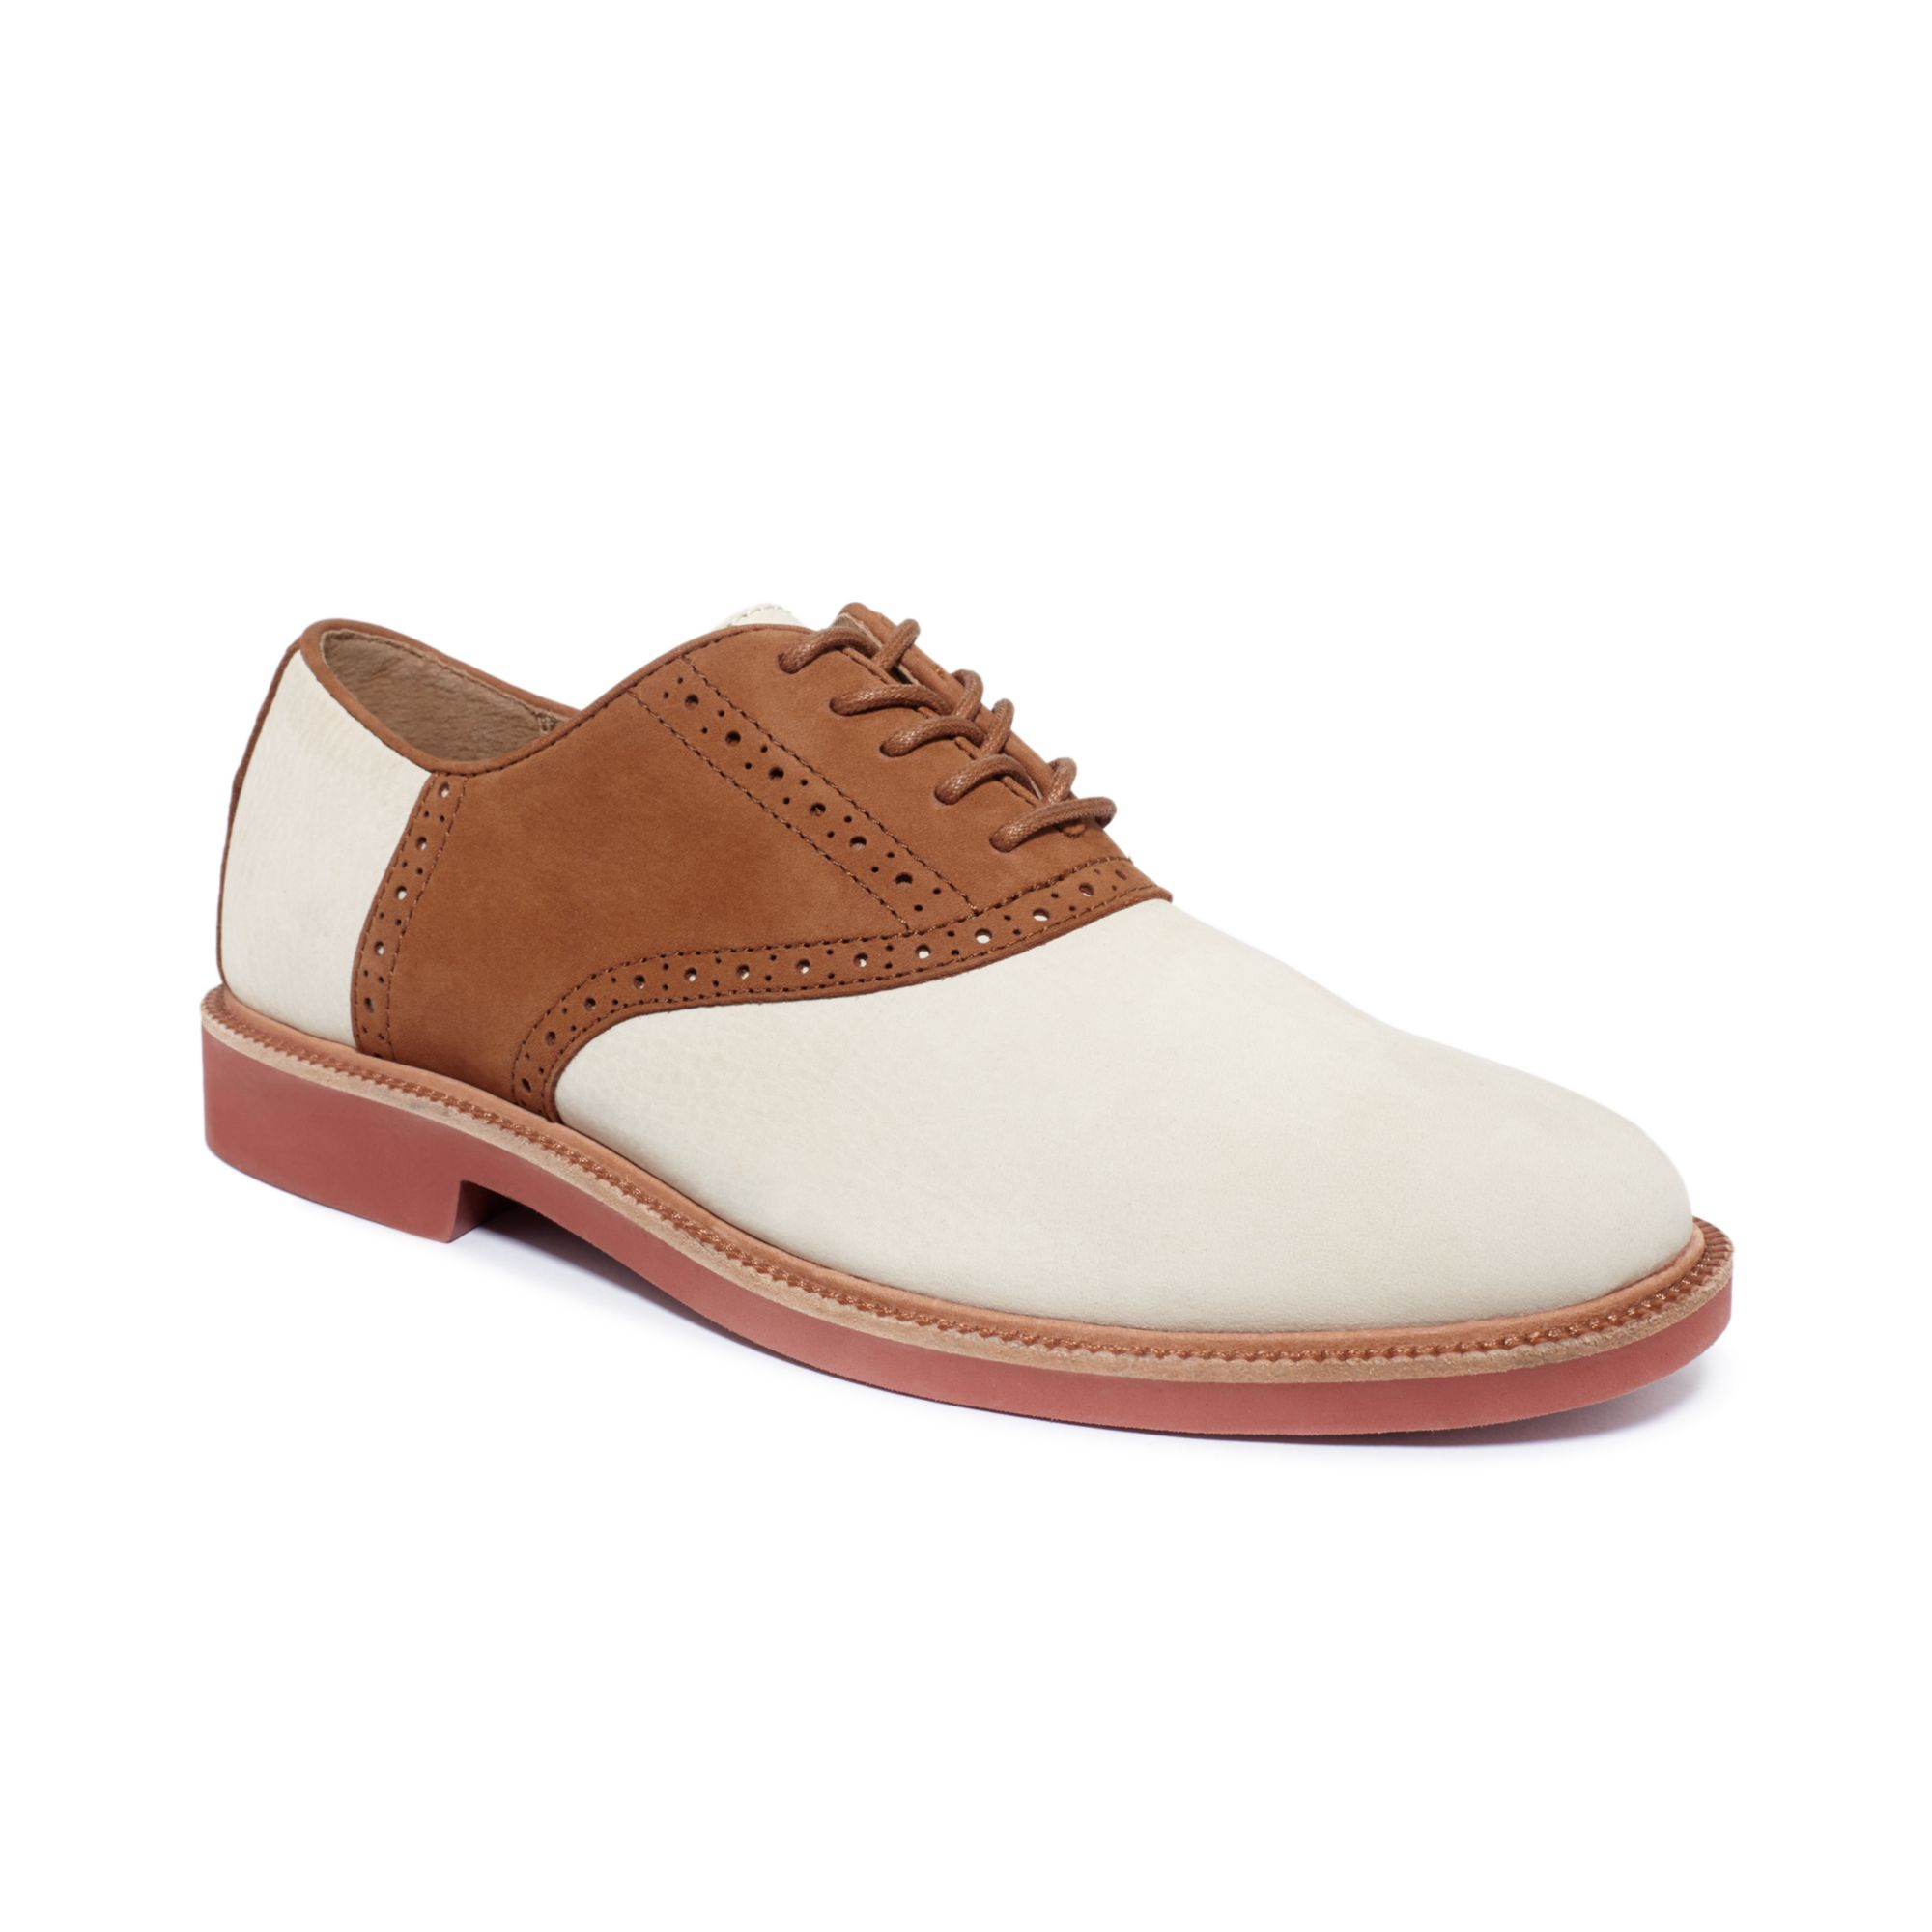 Ralph Lauren Polo Torrington Saddle Dress Shoes in Brown for Men - Lyst